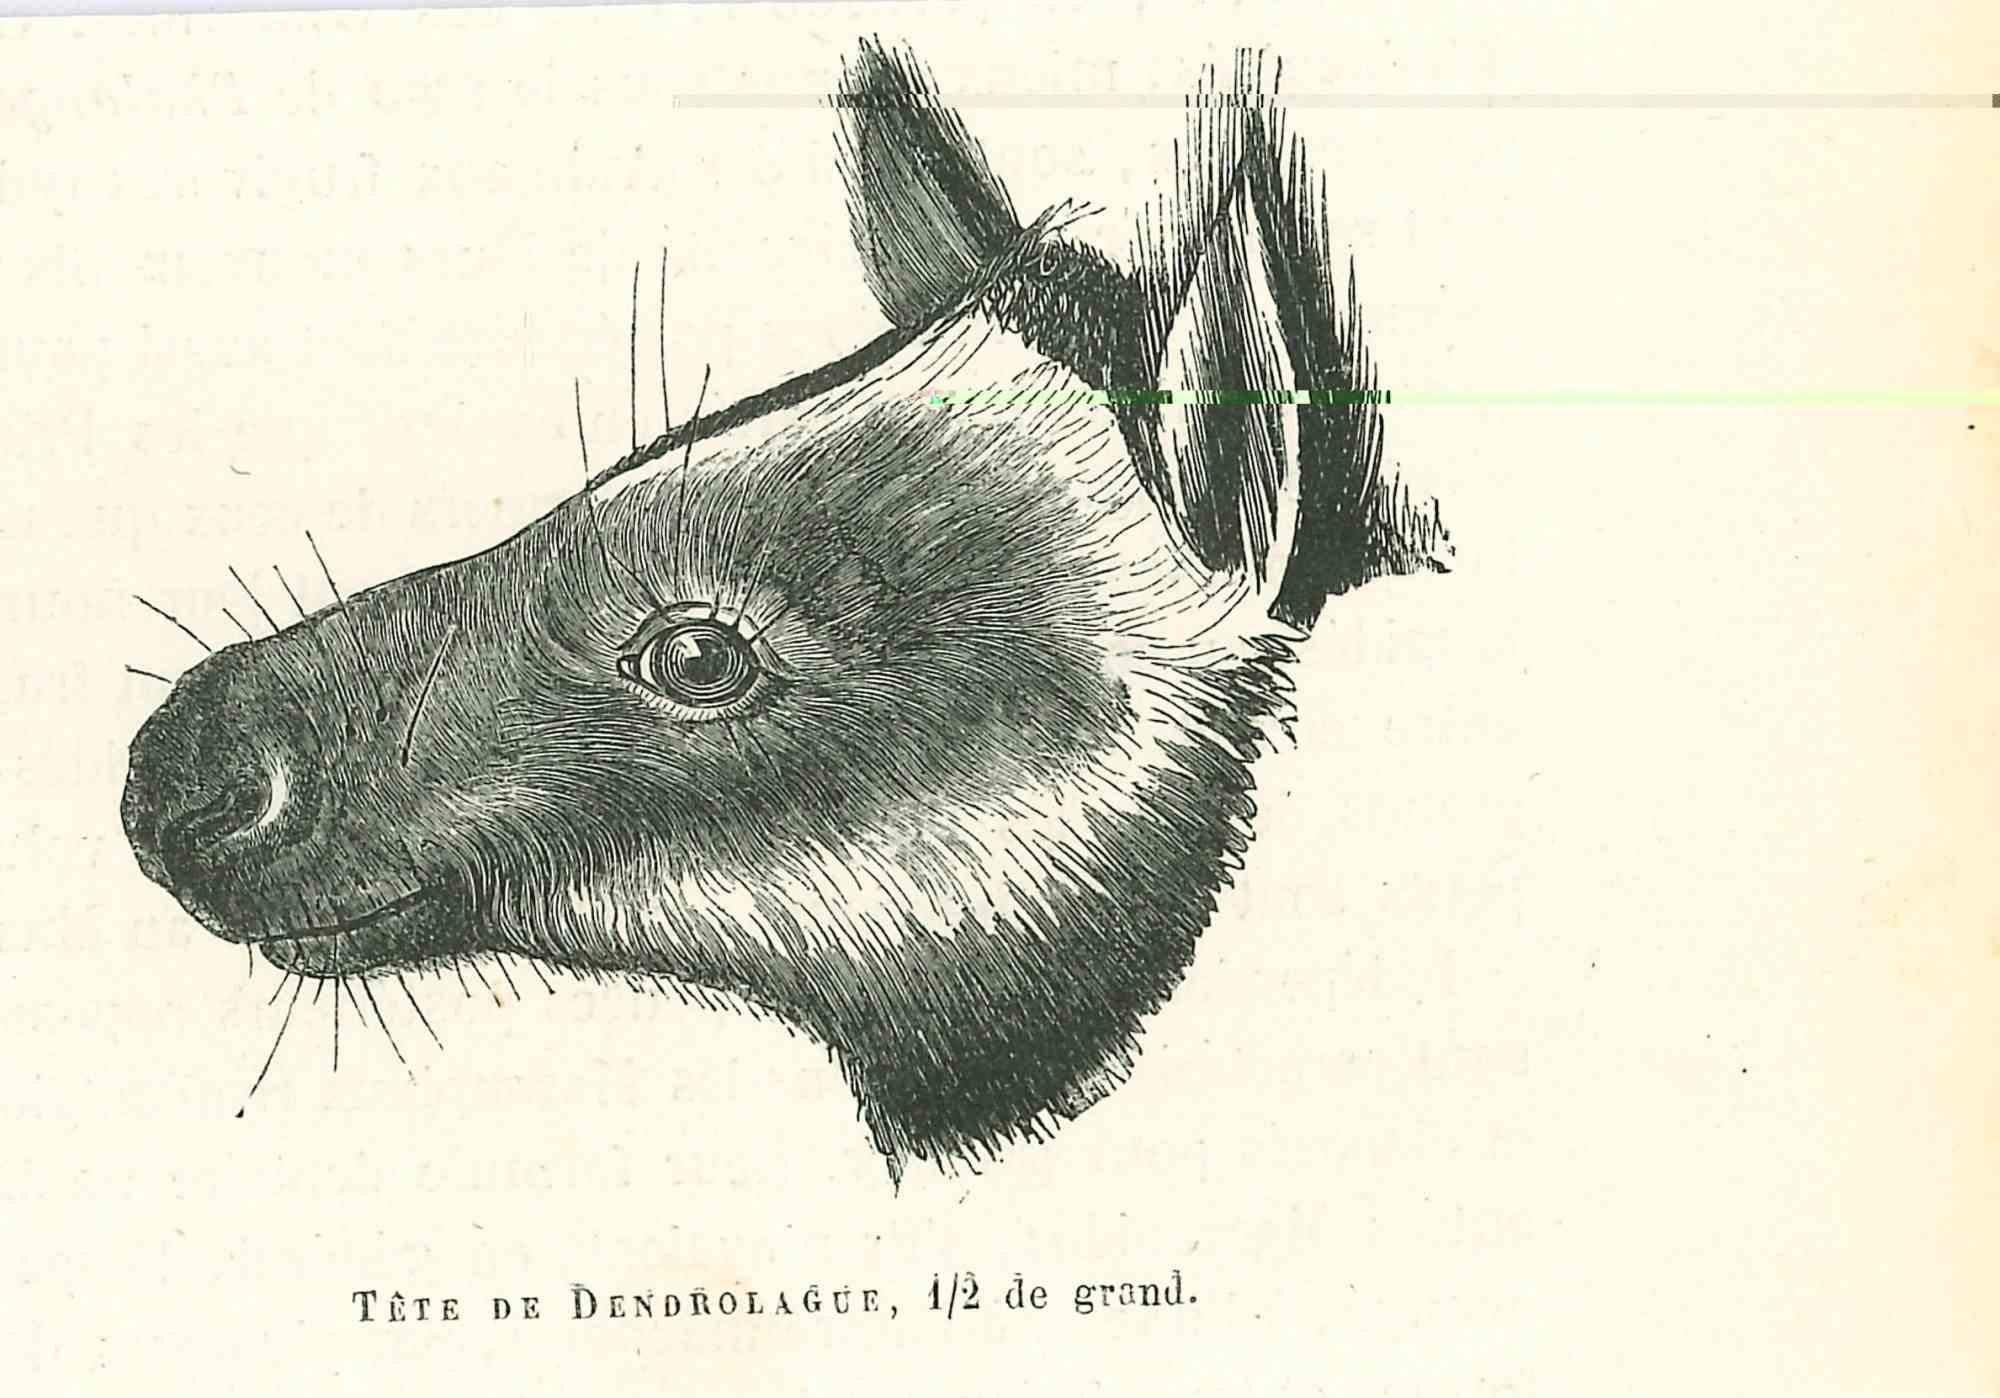 Tree-kangaroo - Original Lithograph by Paul Gervais - 1854